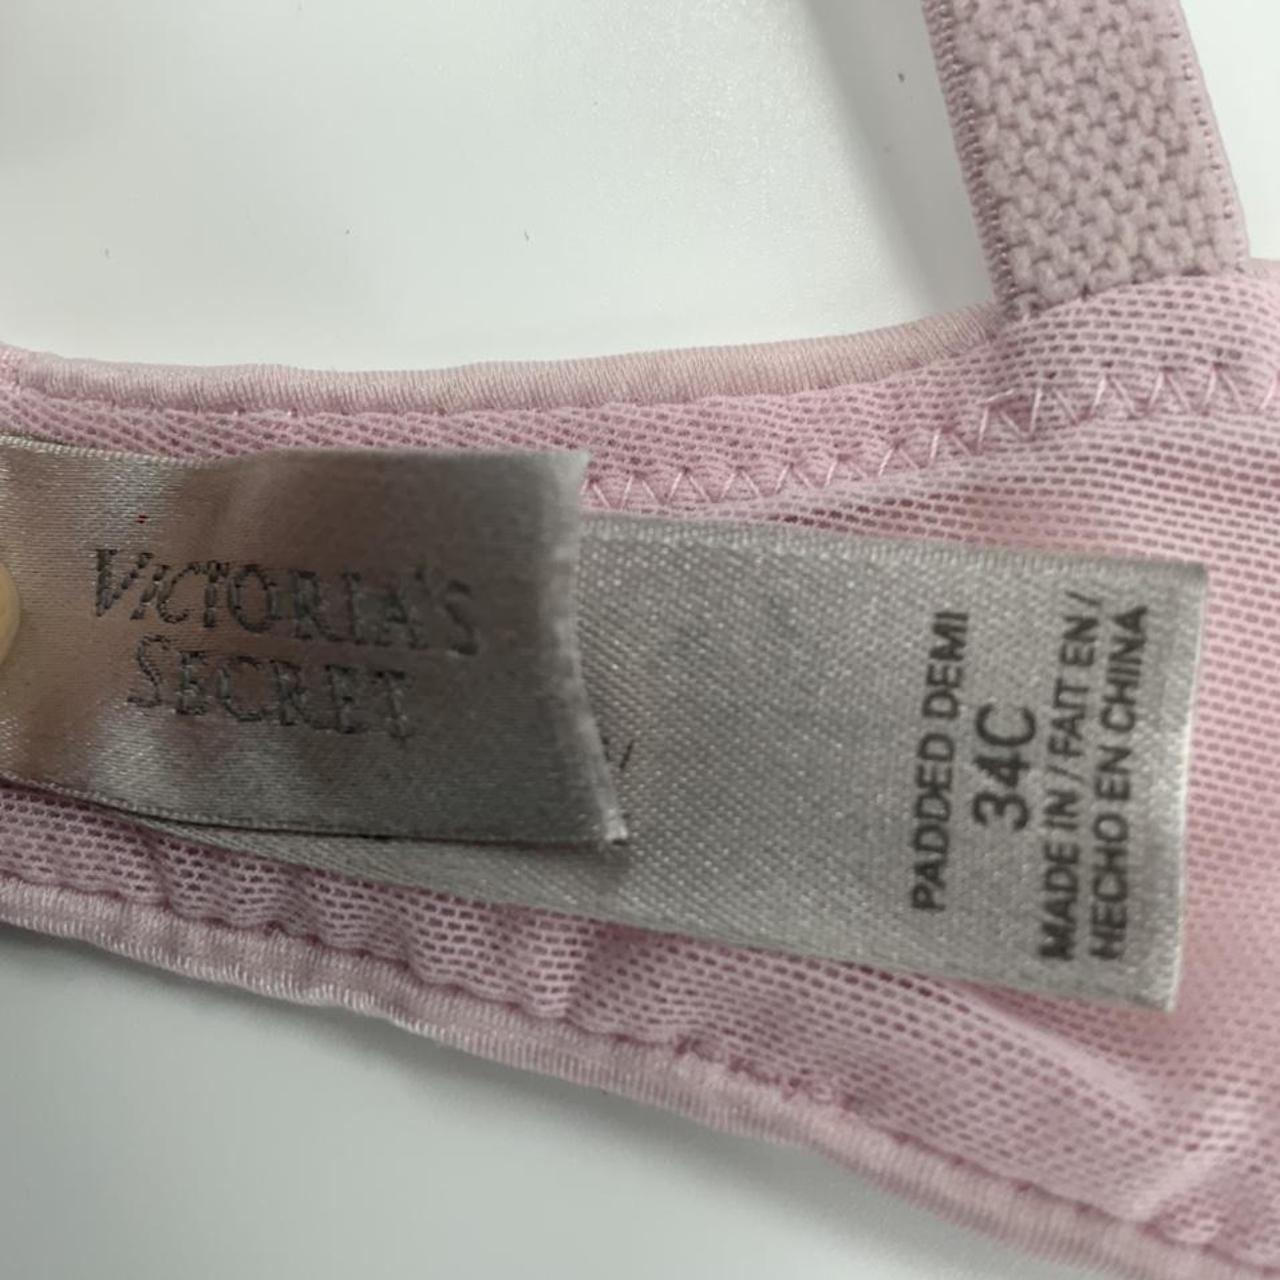 Victoria's Secret Floral Lace Padded Demi Pink Bra - Depop